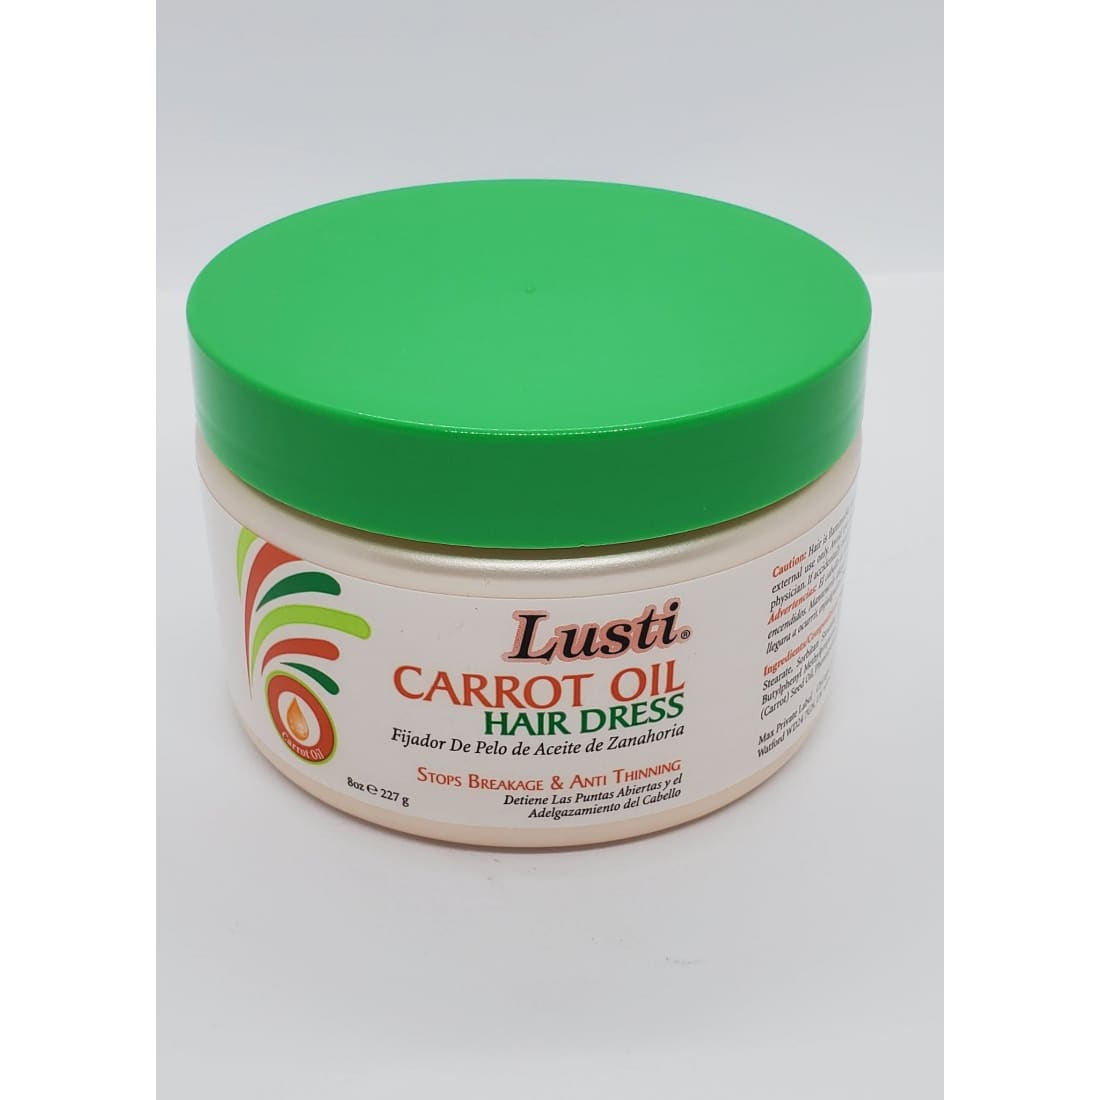 Lusti Carrot Oil Hair Dress 8oz 227g - Hair Products & 